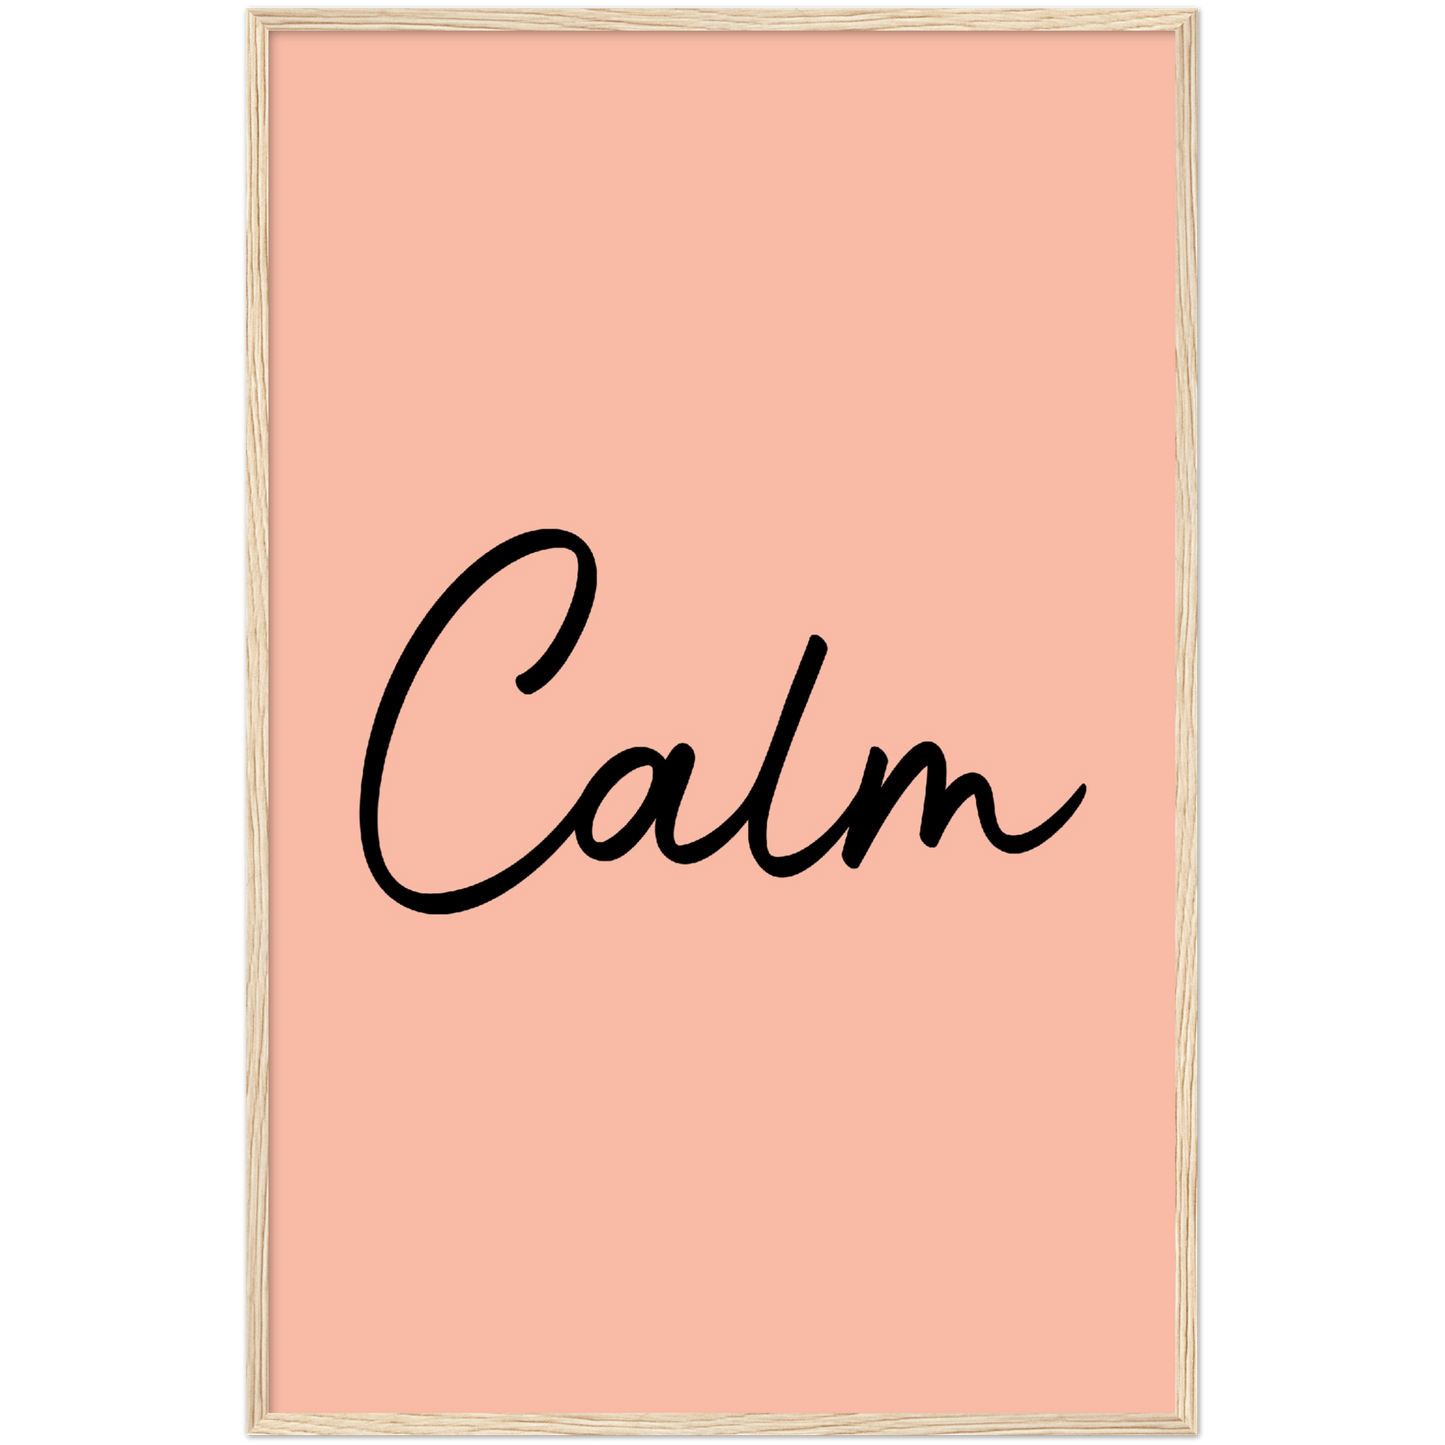 Calm Words -Black Melon Wooden Framed Art Print